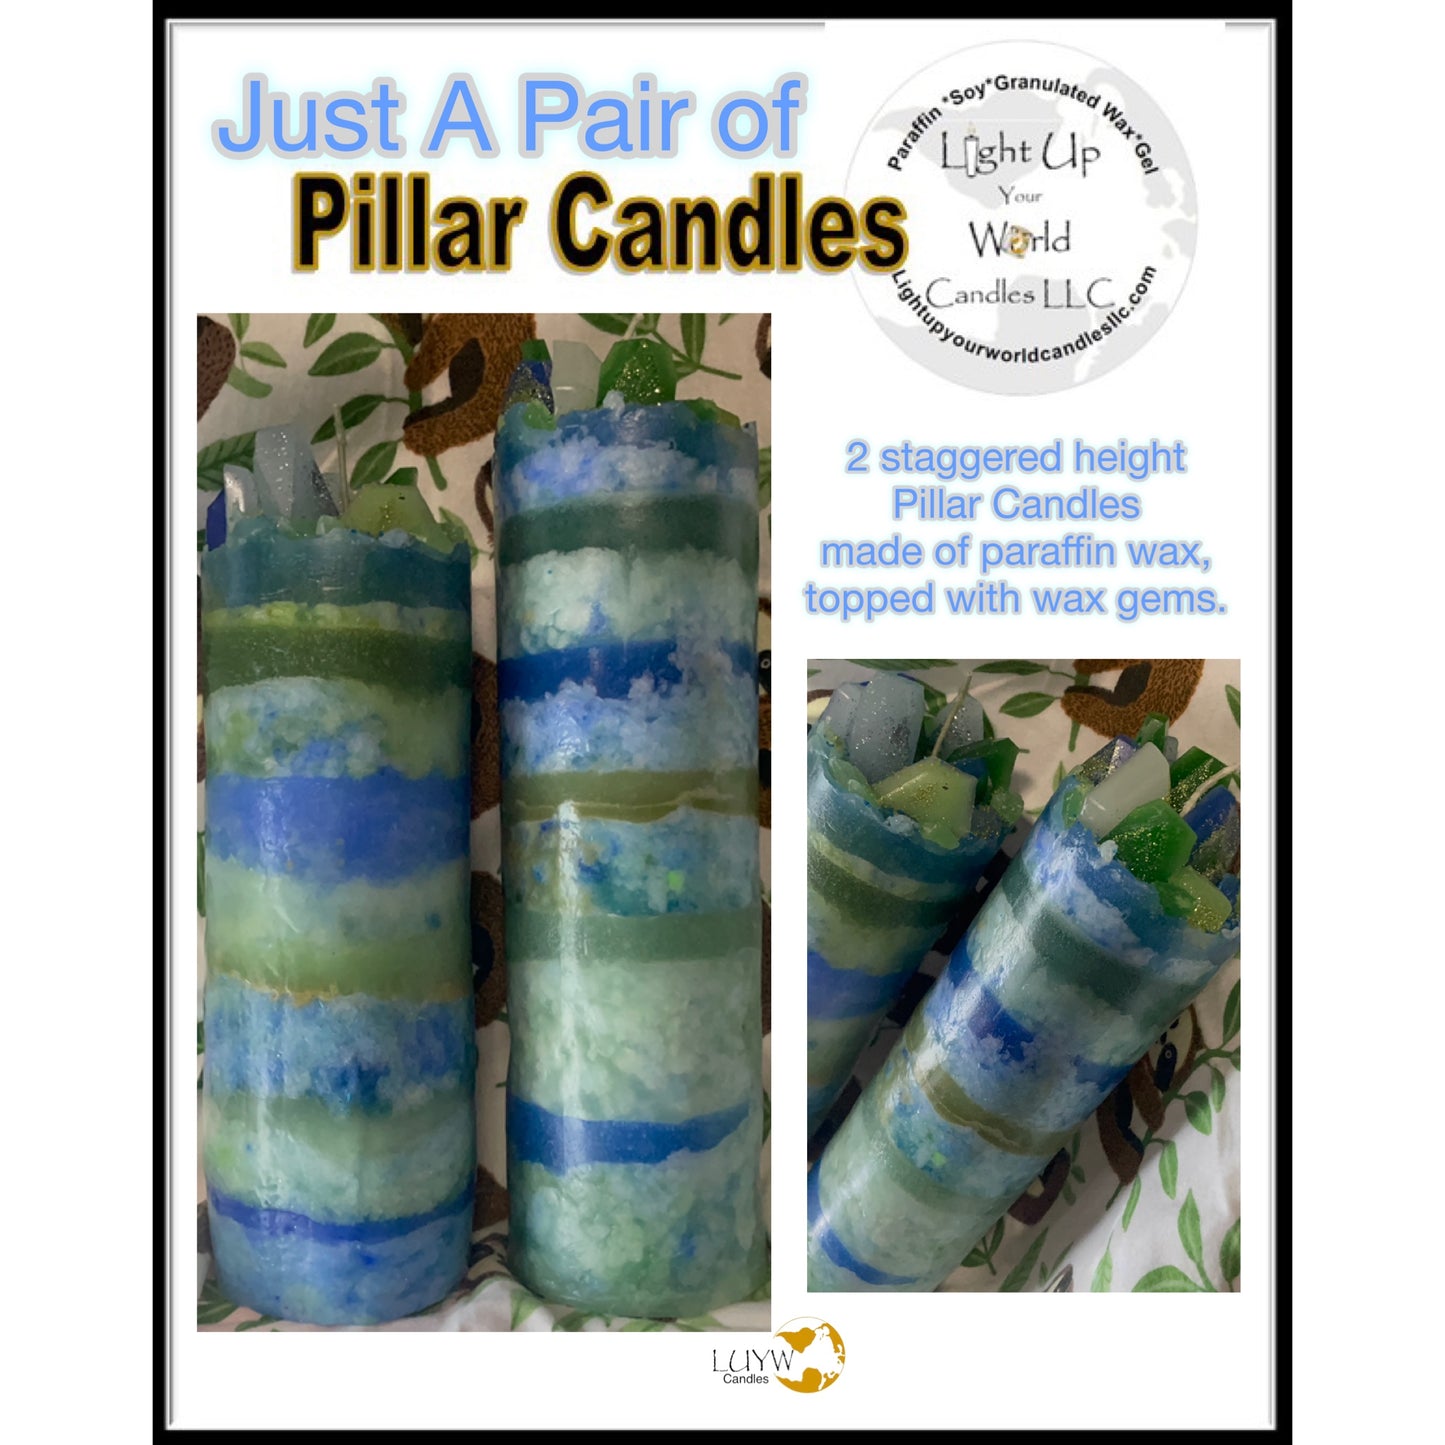 Just a pair of Pillar Candles